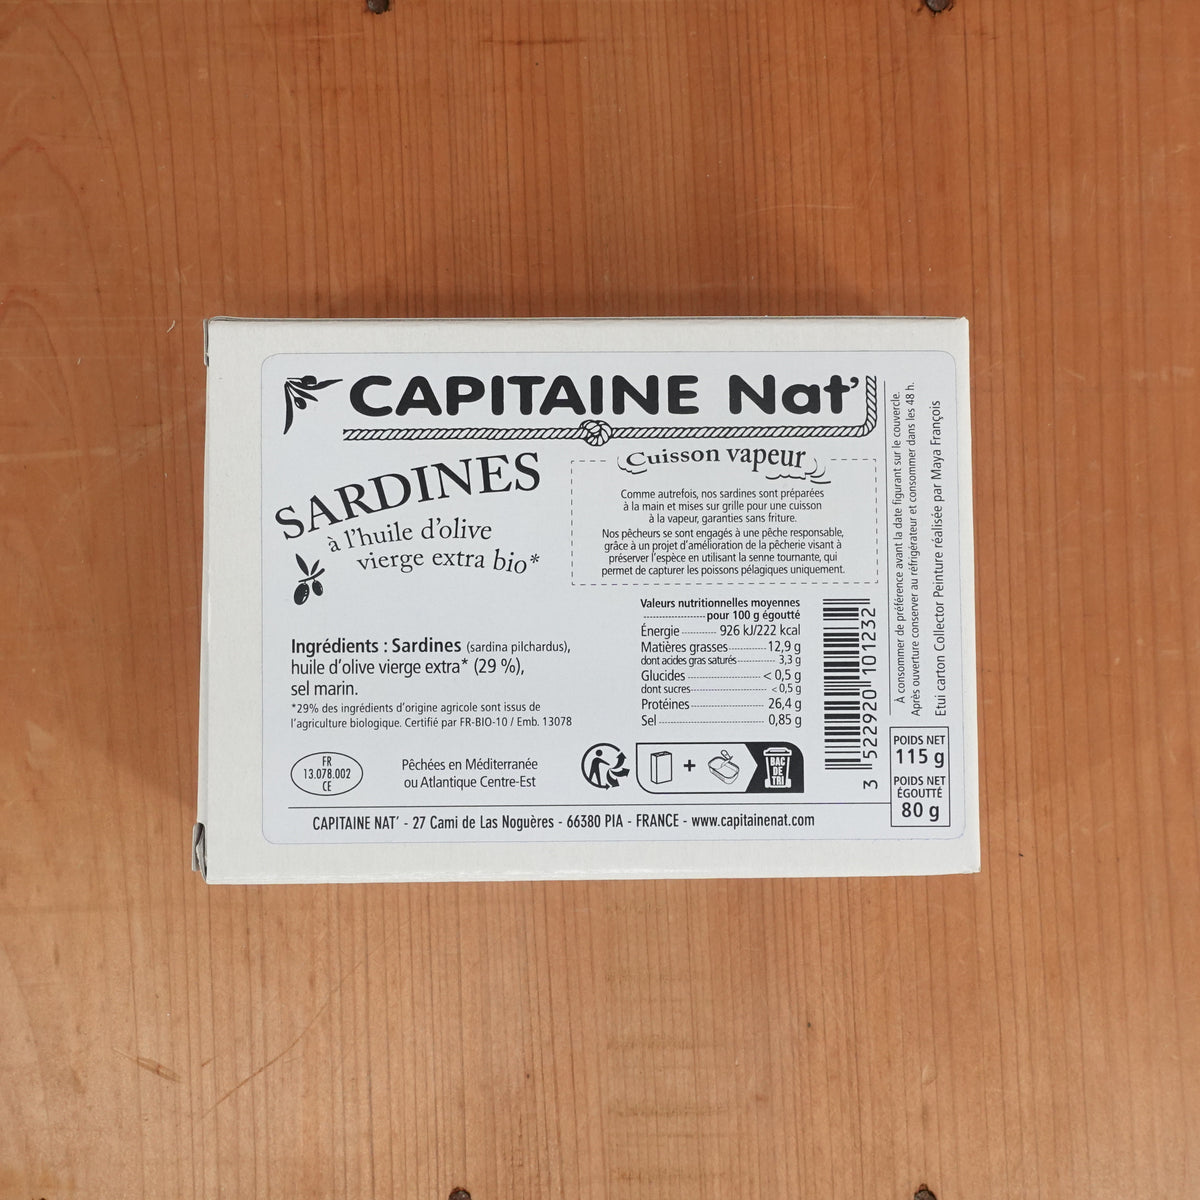 Capitaine Nat' Sardines in Organic Extra Virgin Olive Oil - 115g